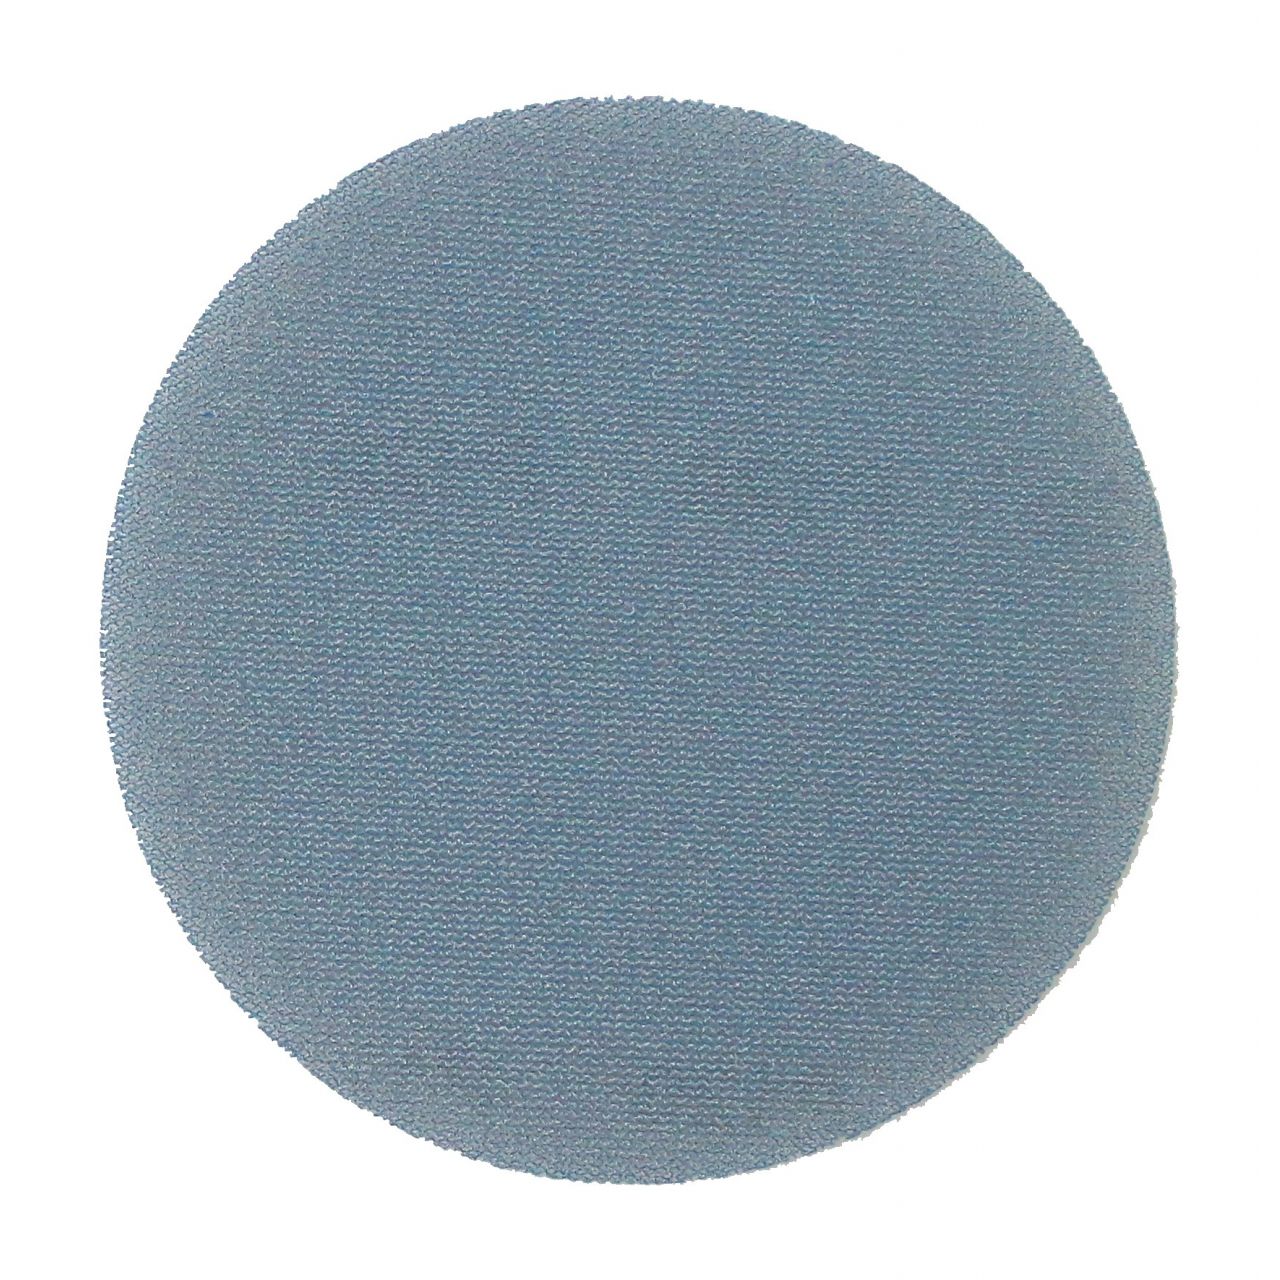 50 Discos de malla abrasiva autoadherente azul MAB (125/80)